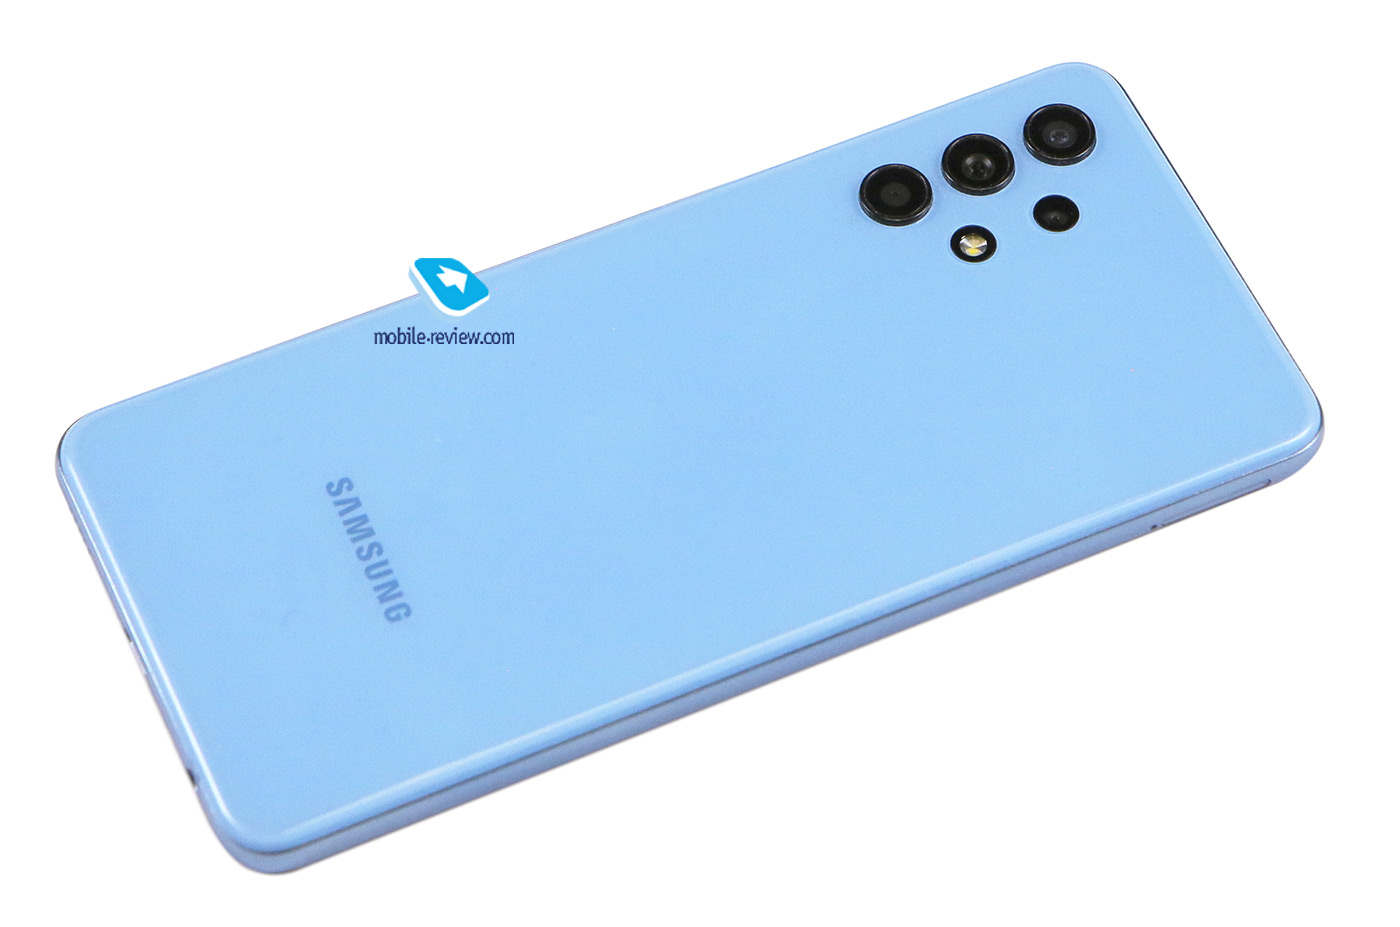 Огляд смартфона Samsung Galaxy A32 (SM-A325F/DS)